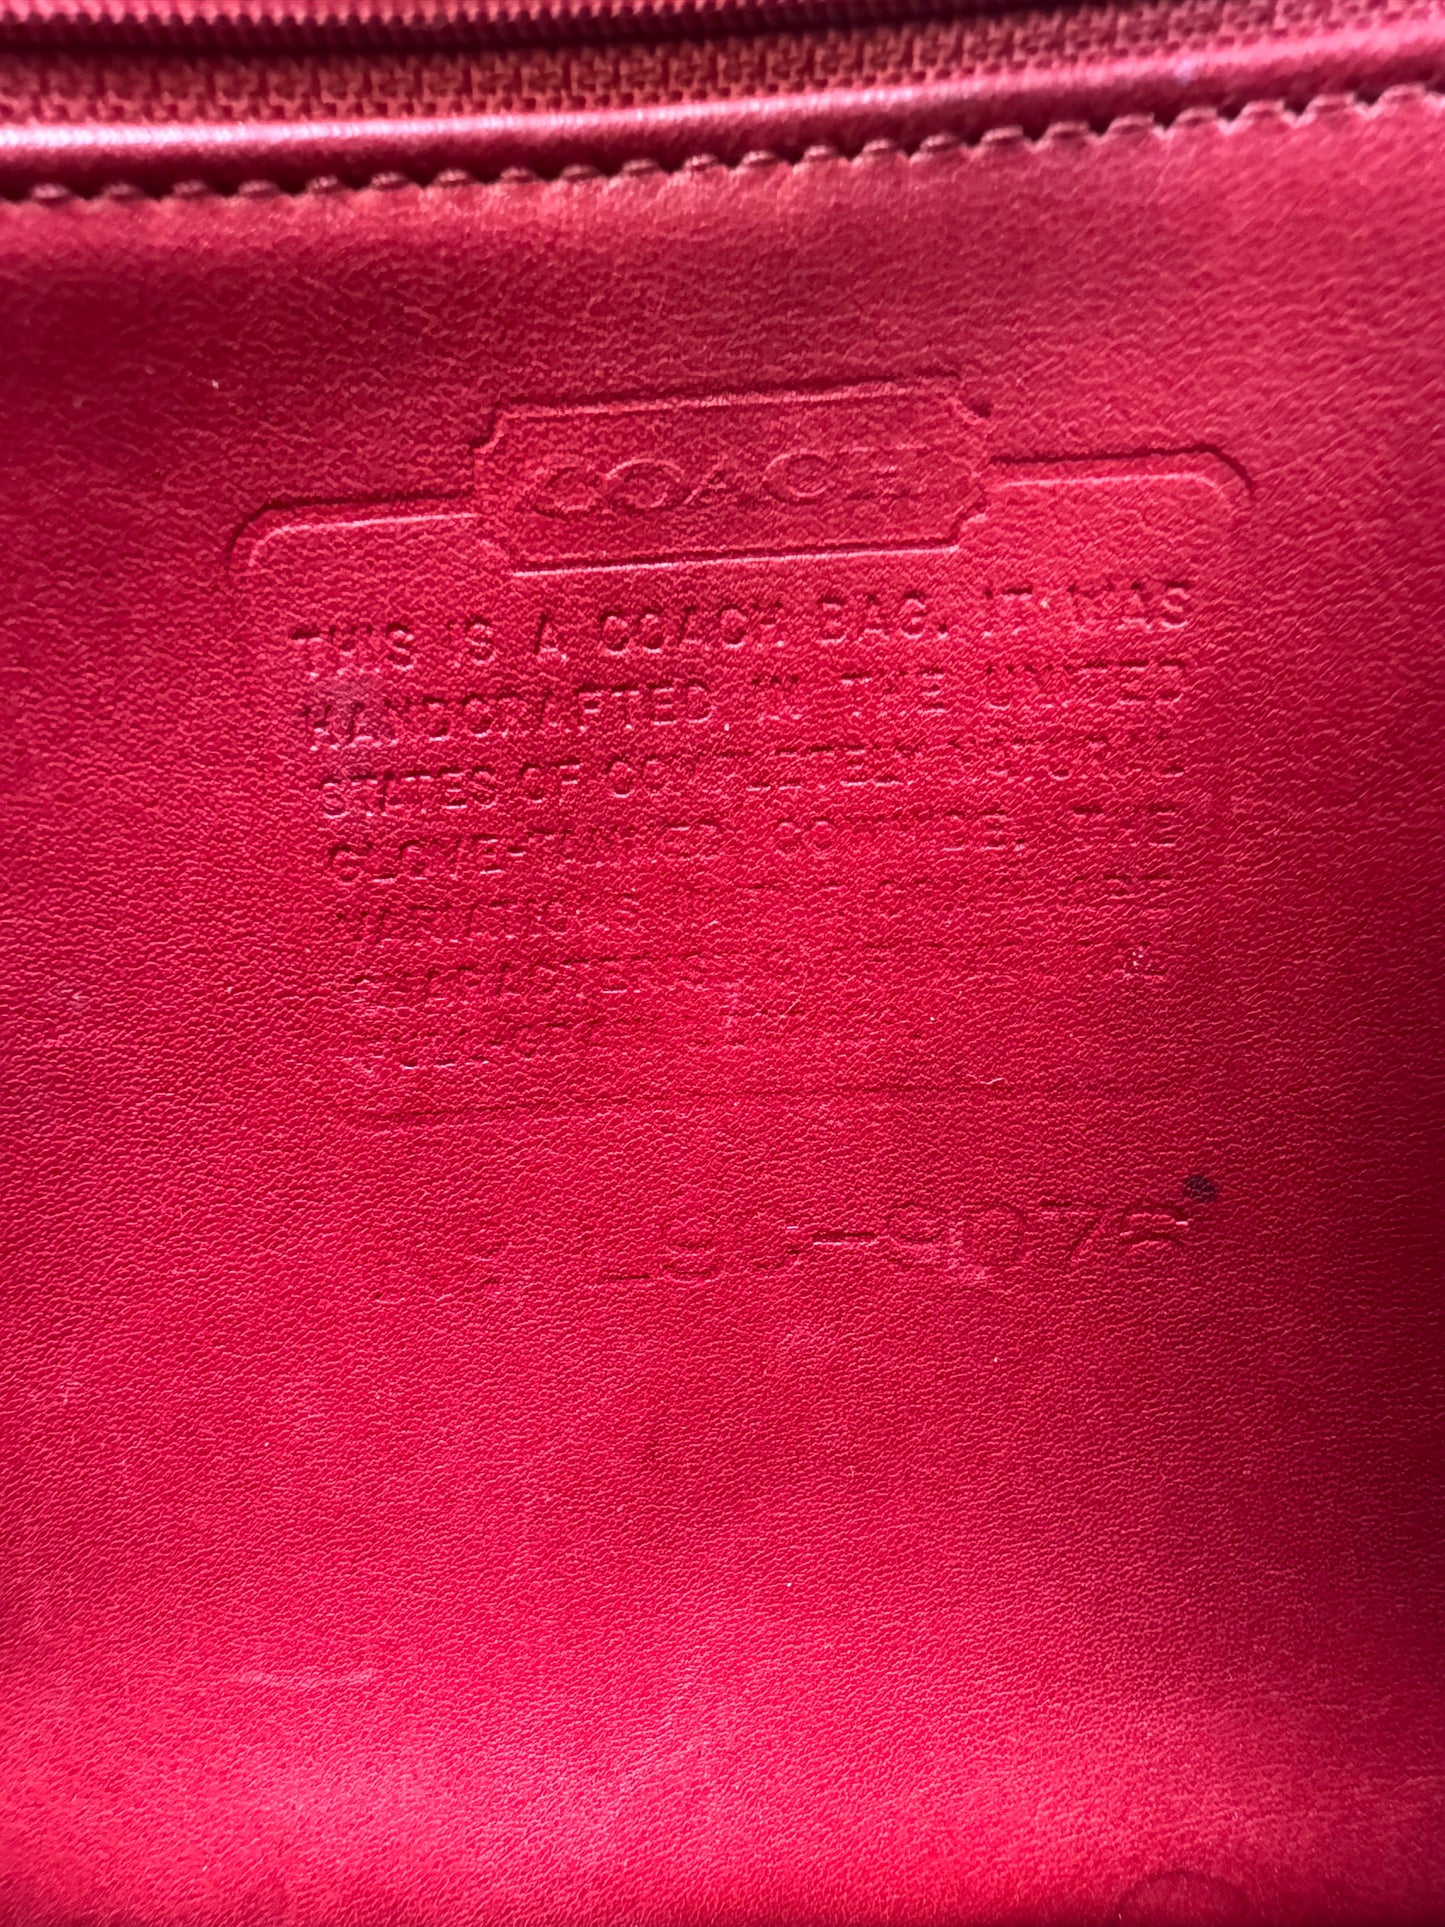 Red Vintage Coach Companion Flap 9076 w/Hangtag!